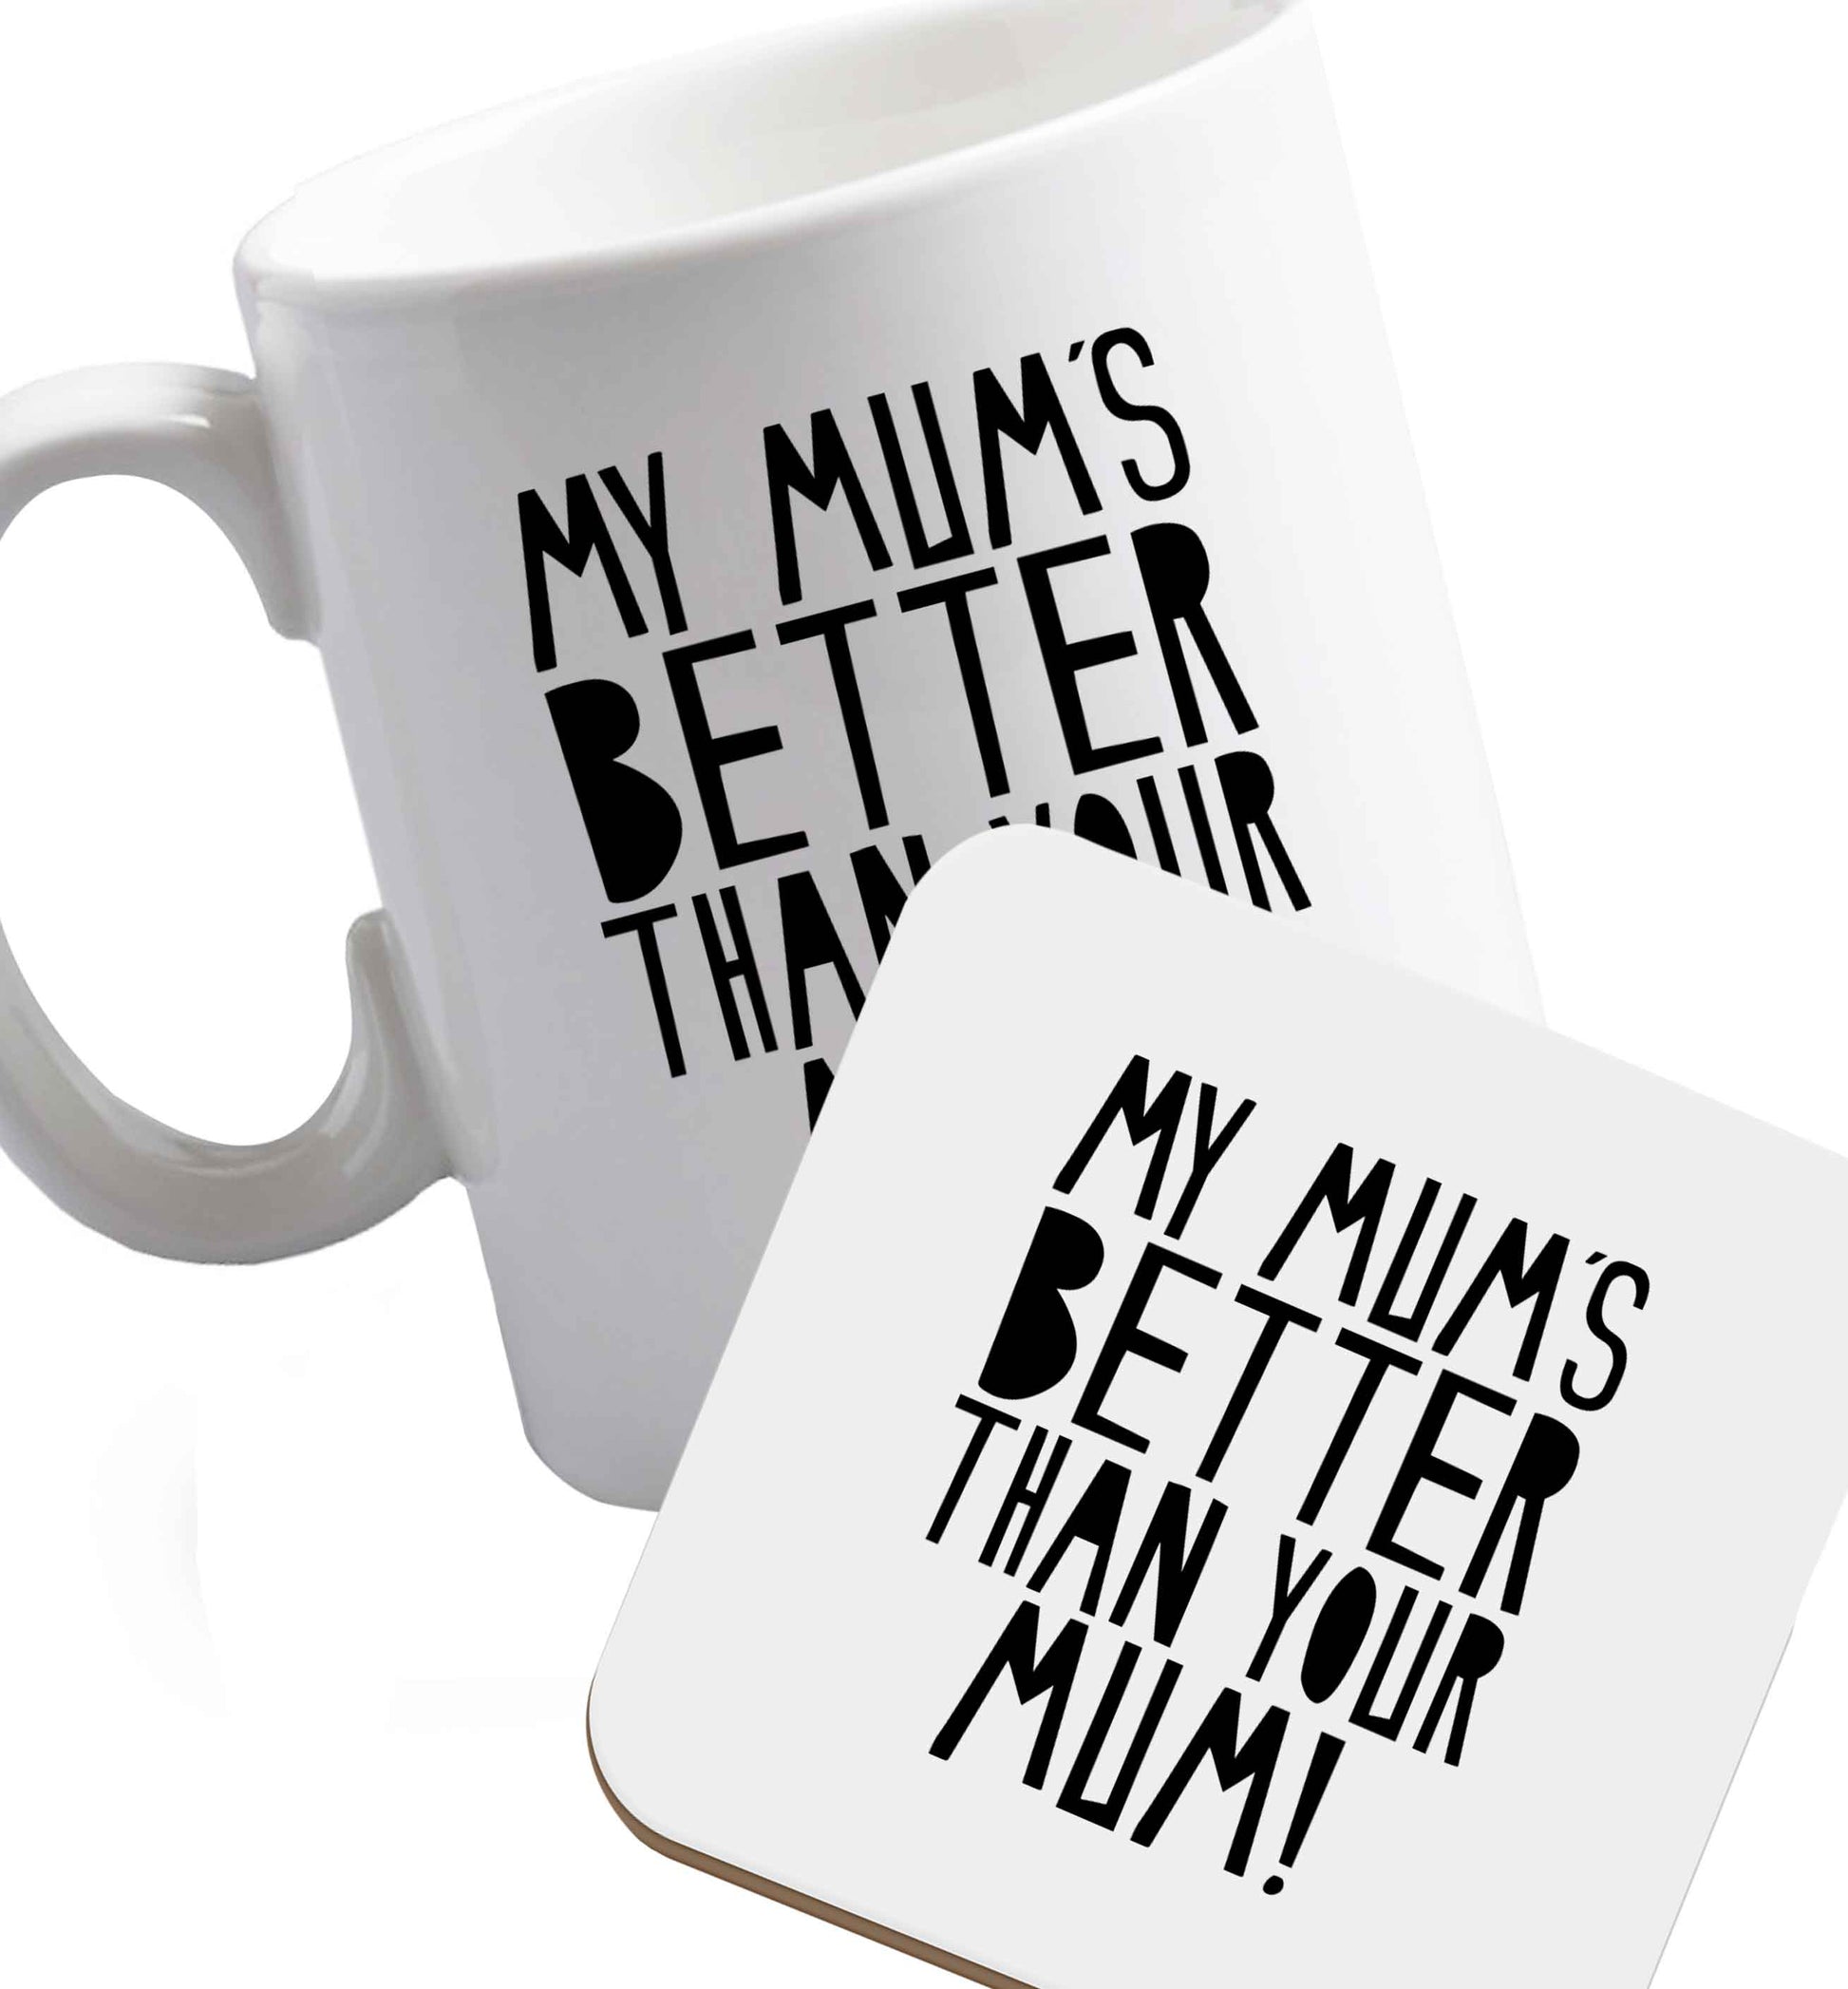 10 oz My mum's better than your mum ceramic mug and coaster set right handed